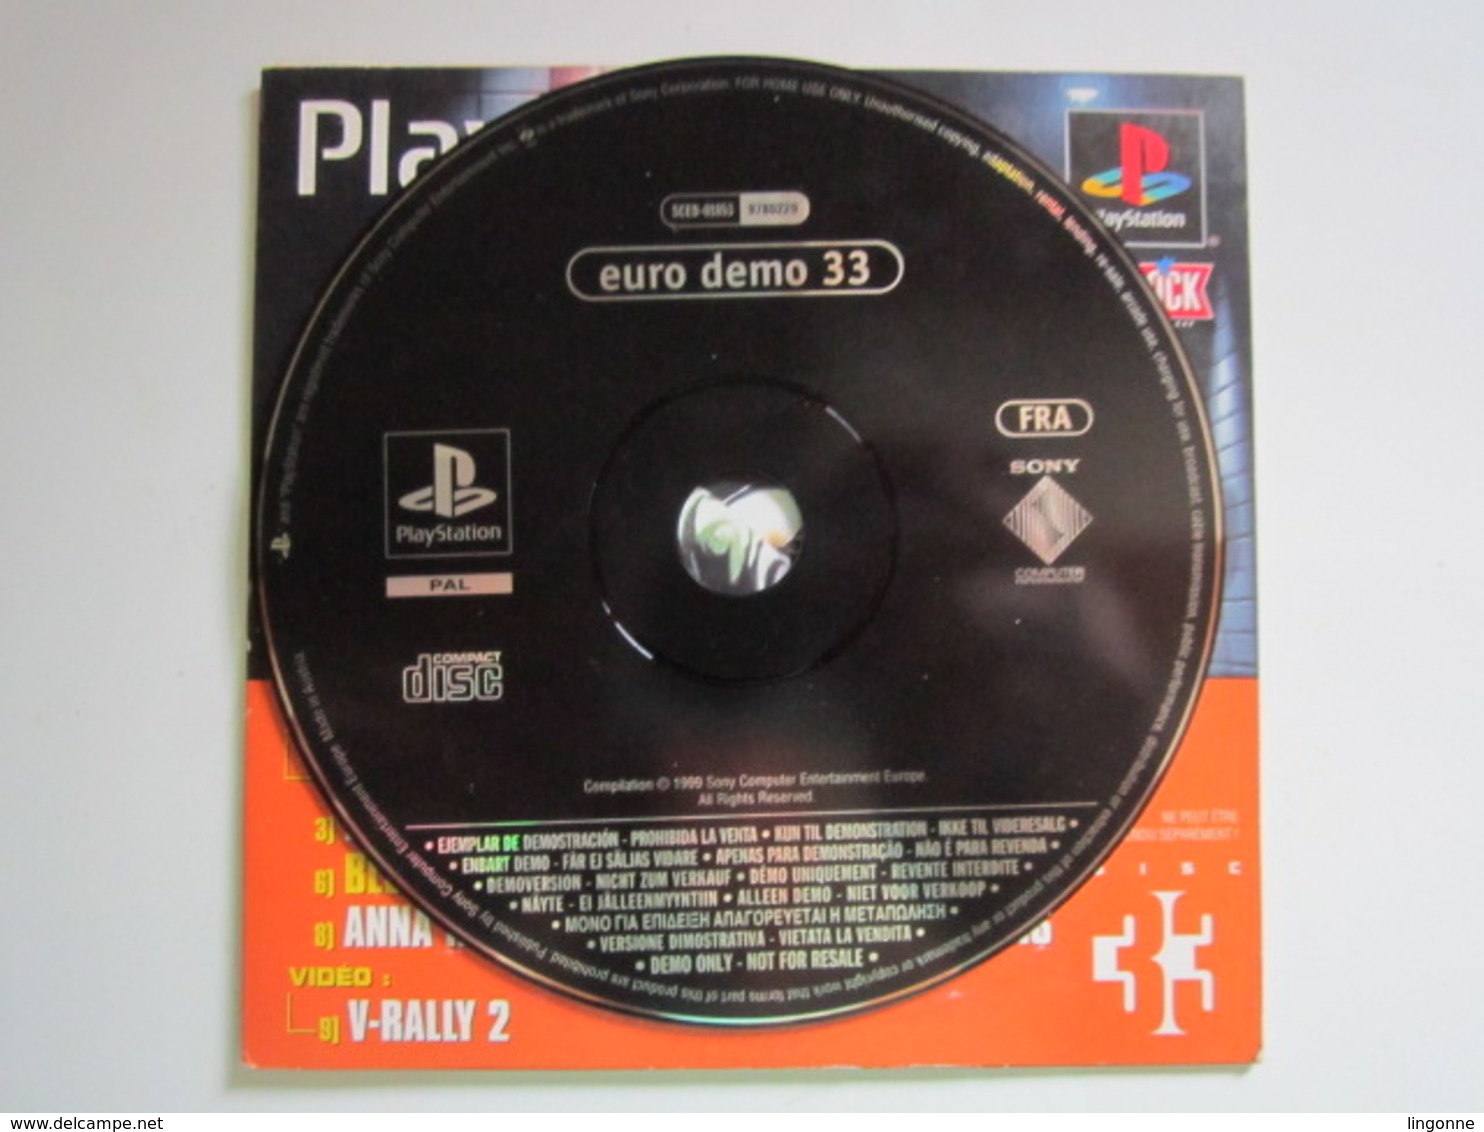 Sony PlayStation DISC 33 - Playstation